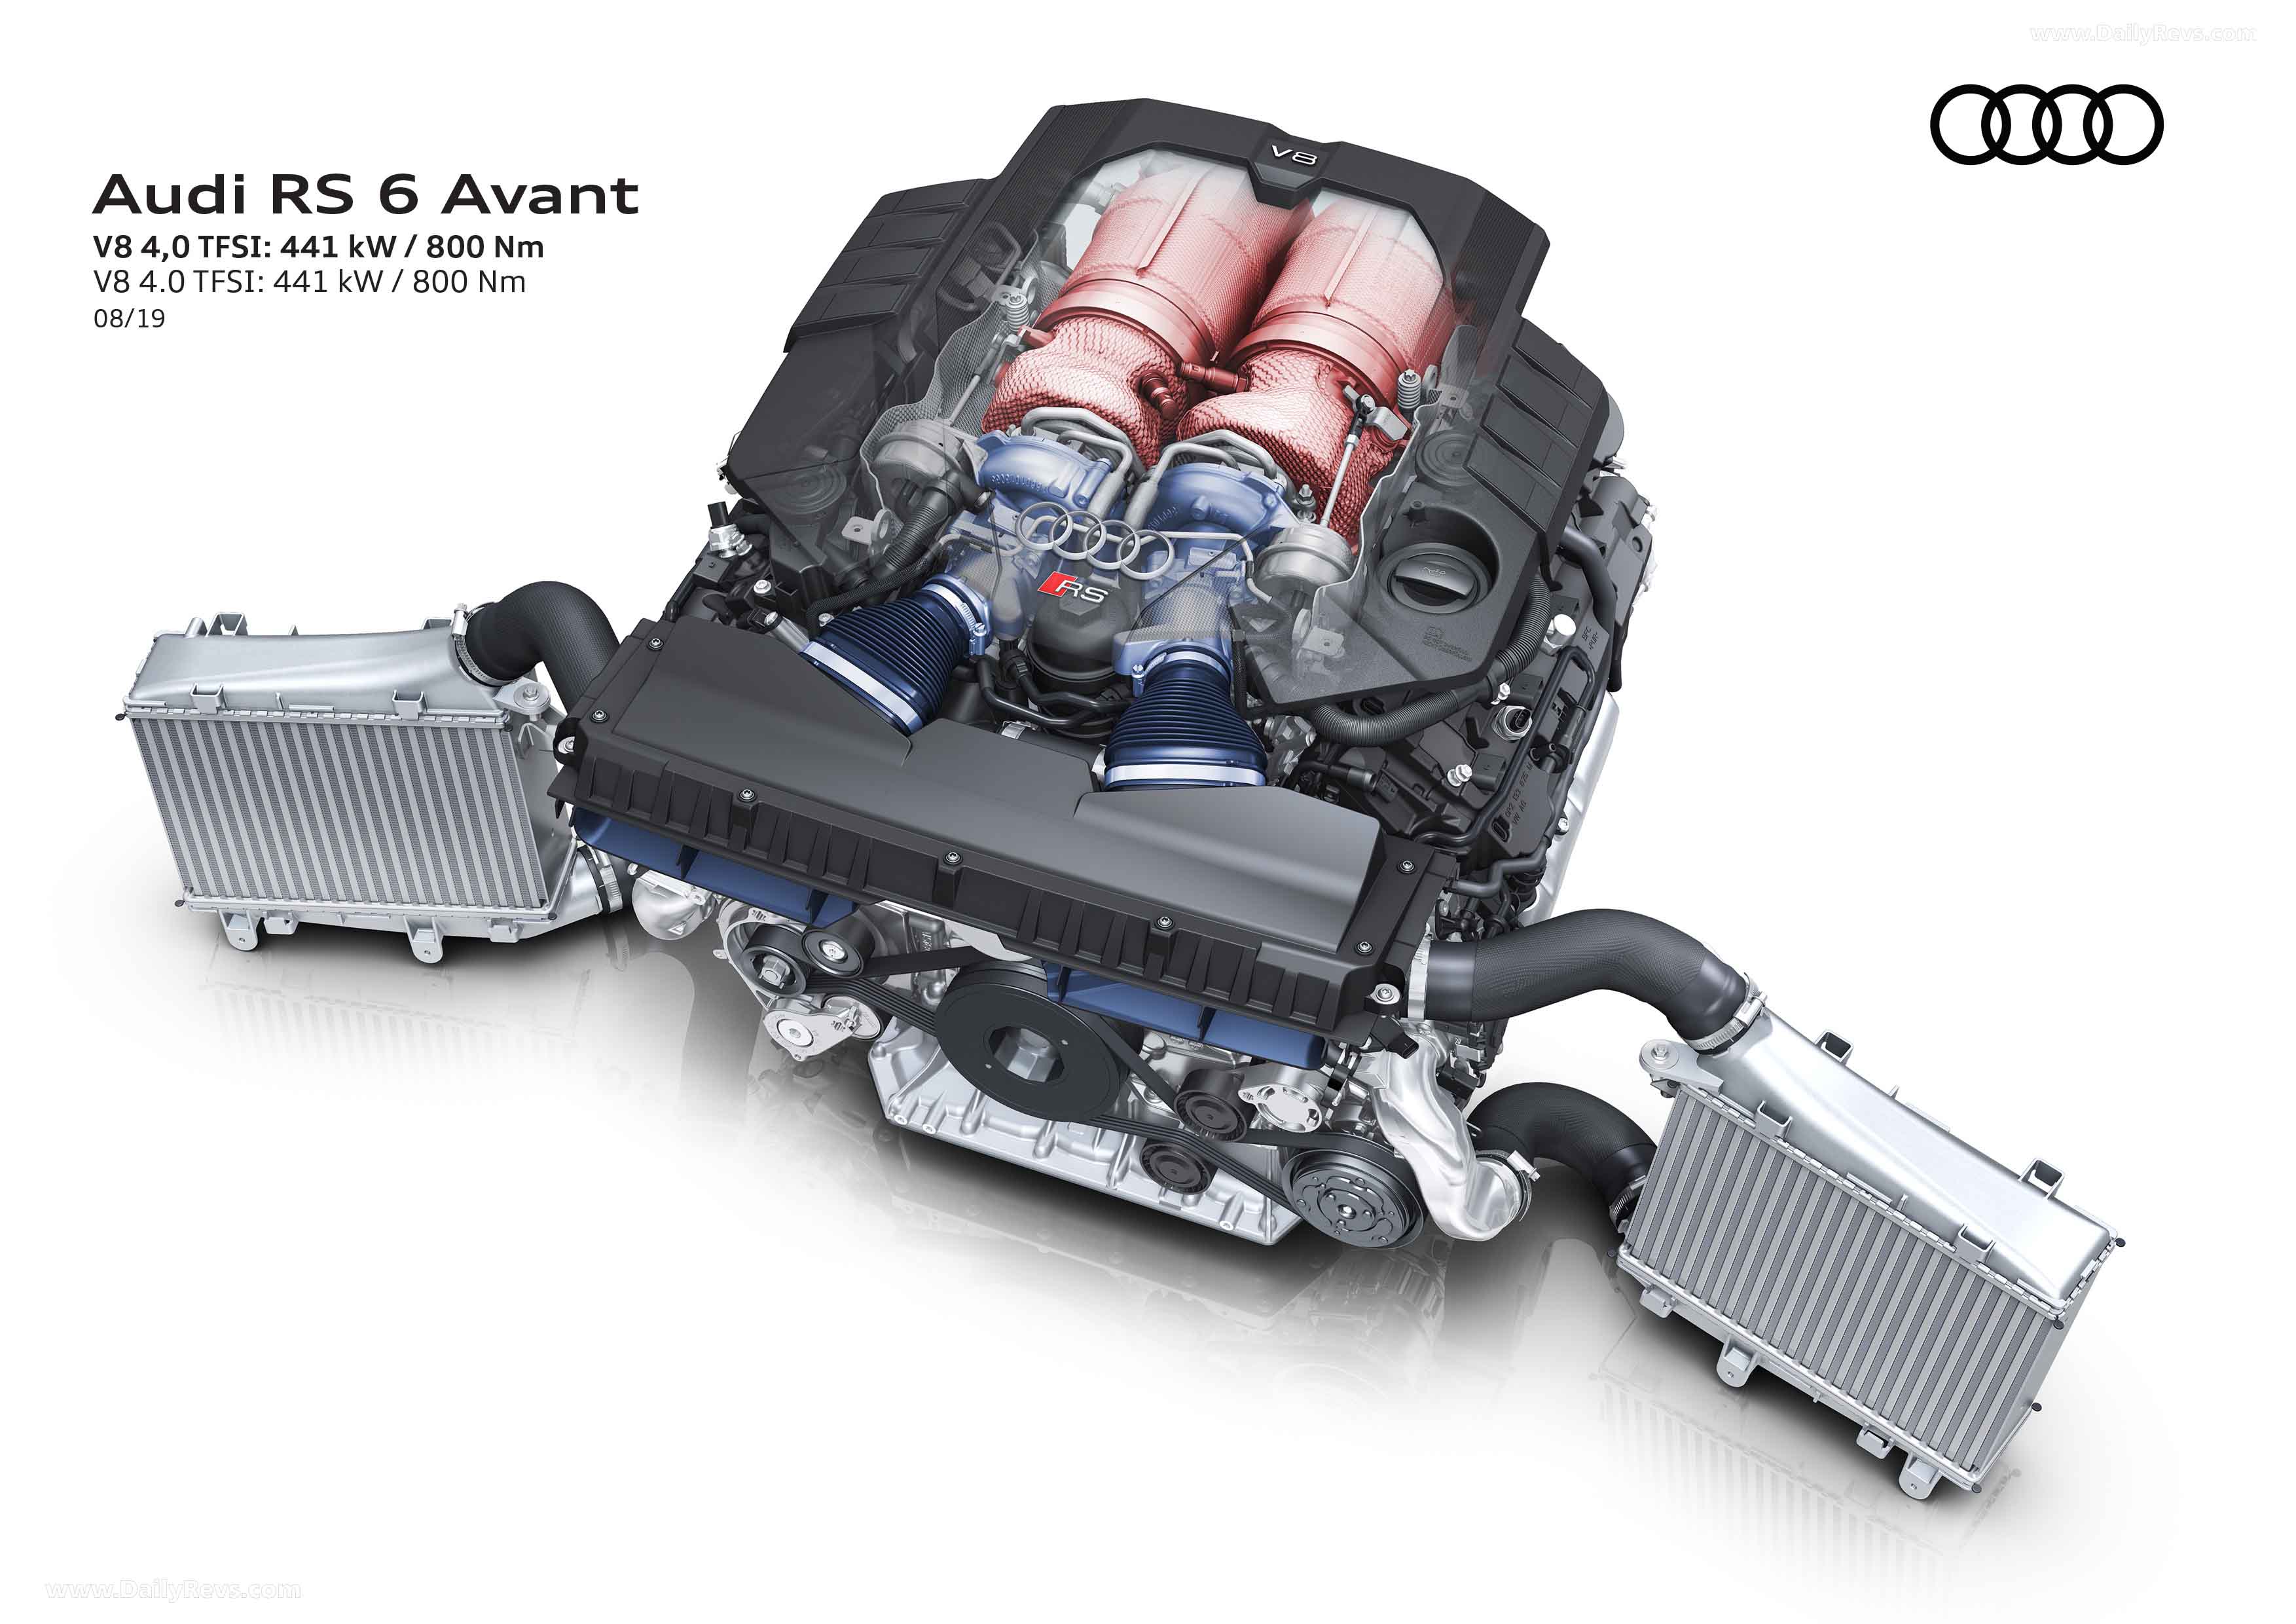 2020 Audi Rs6 Avant Full - 2020 Audi Rs6 Avant Engine , HD Wallpaper & Backgrounds